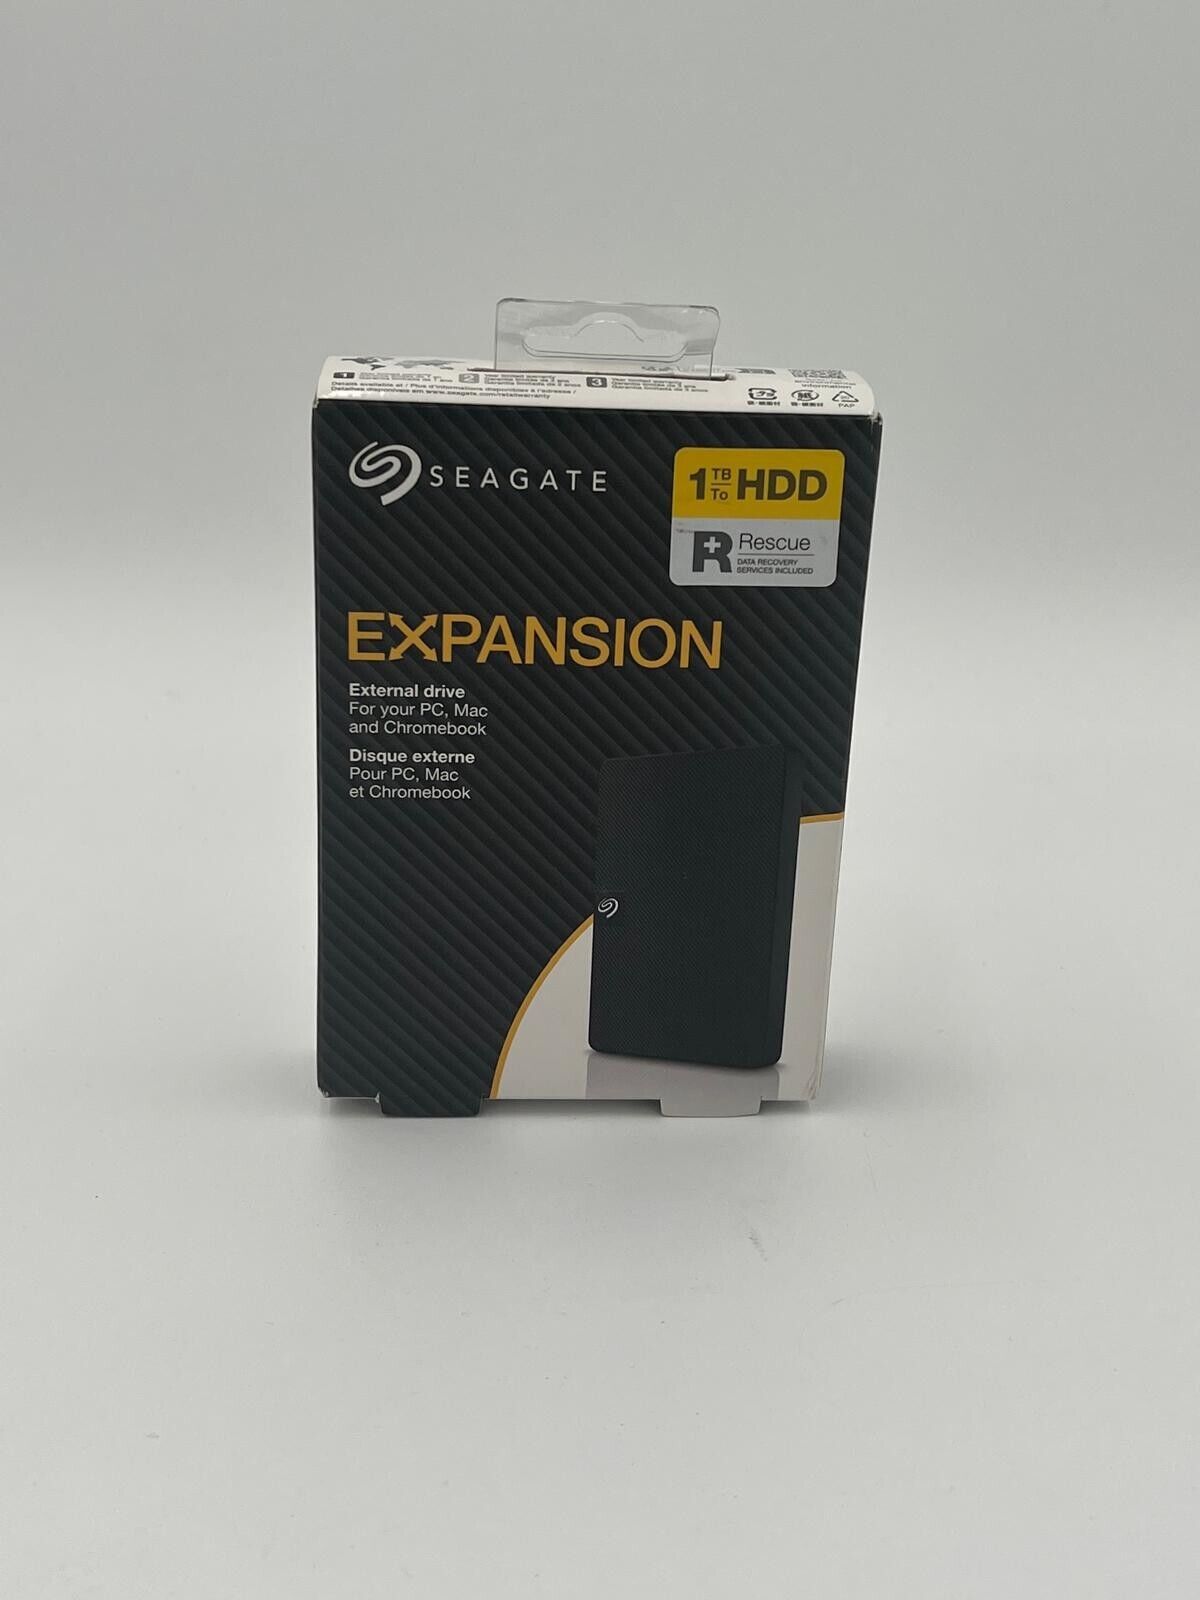 Seagate 1TB HDD Expansion External Hard Drive USB 3.0 PC MAC Chromebook